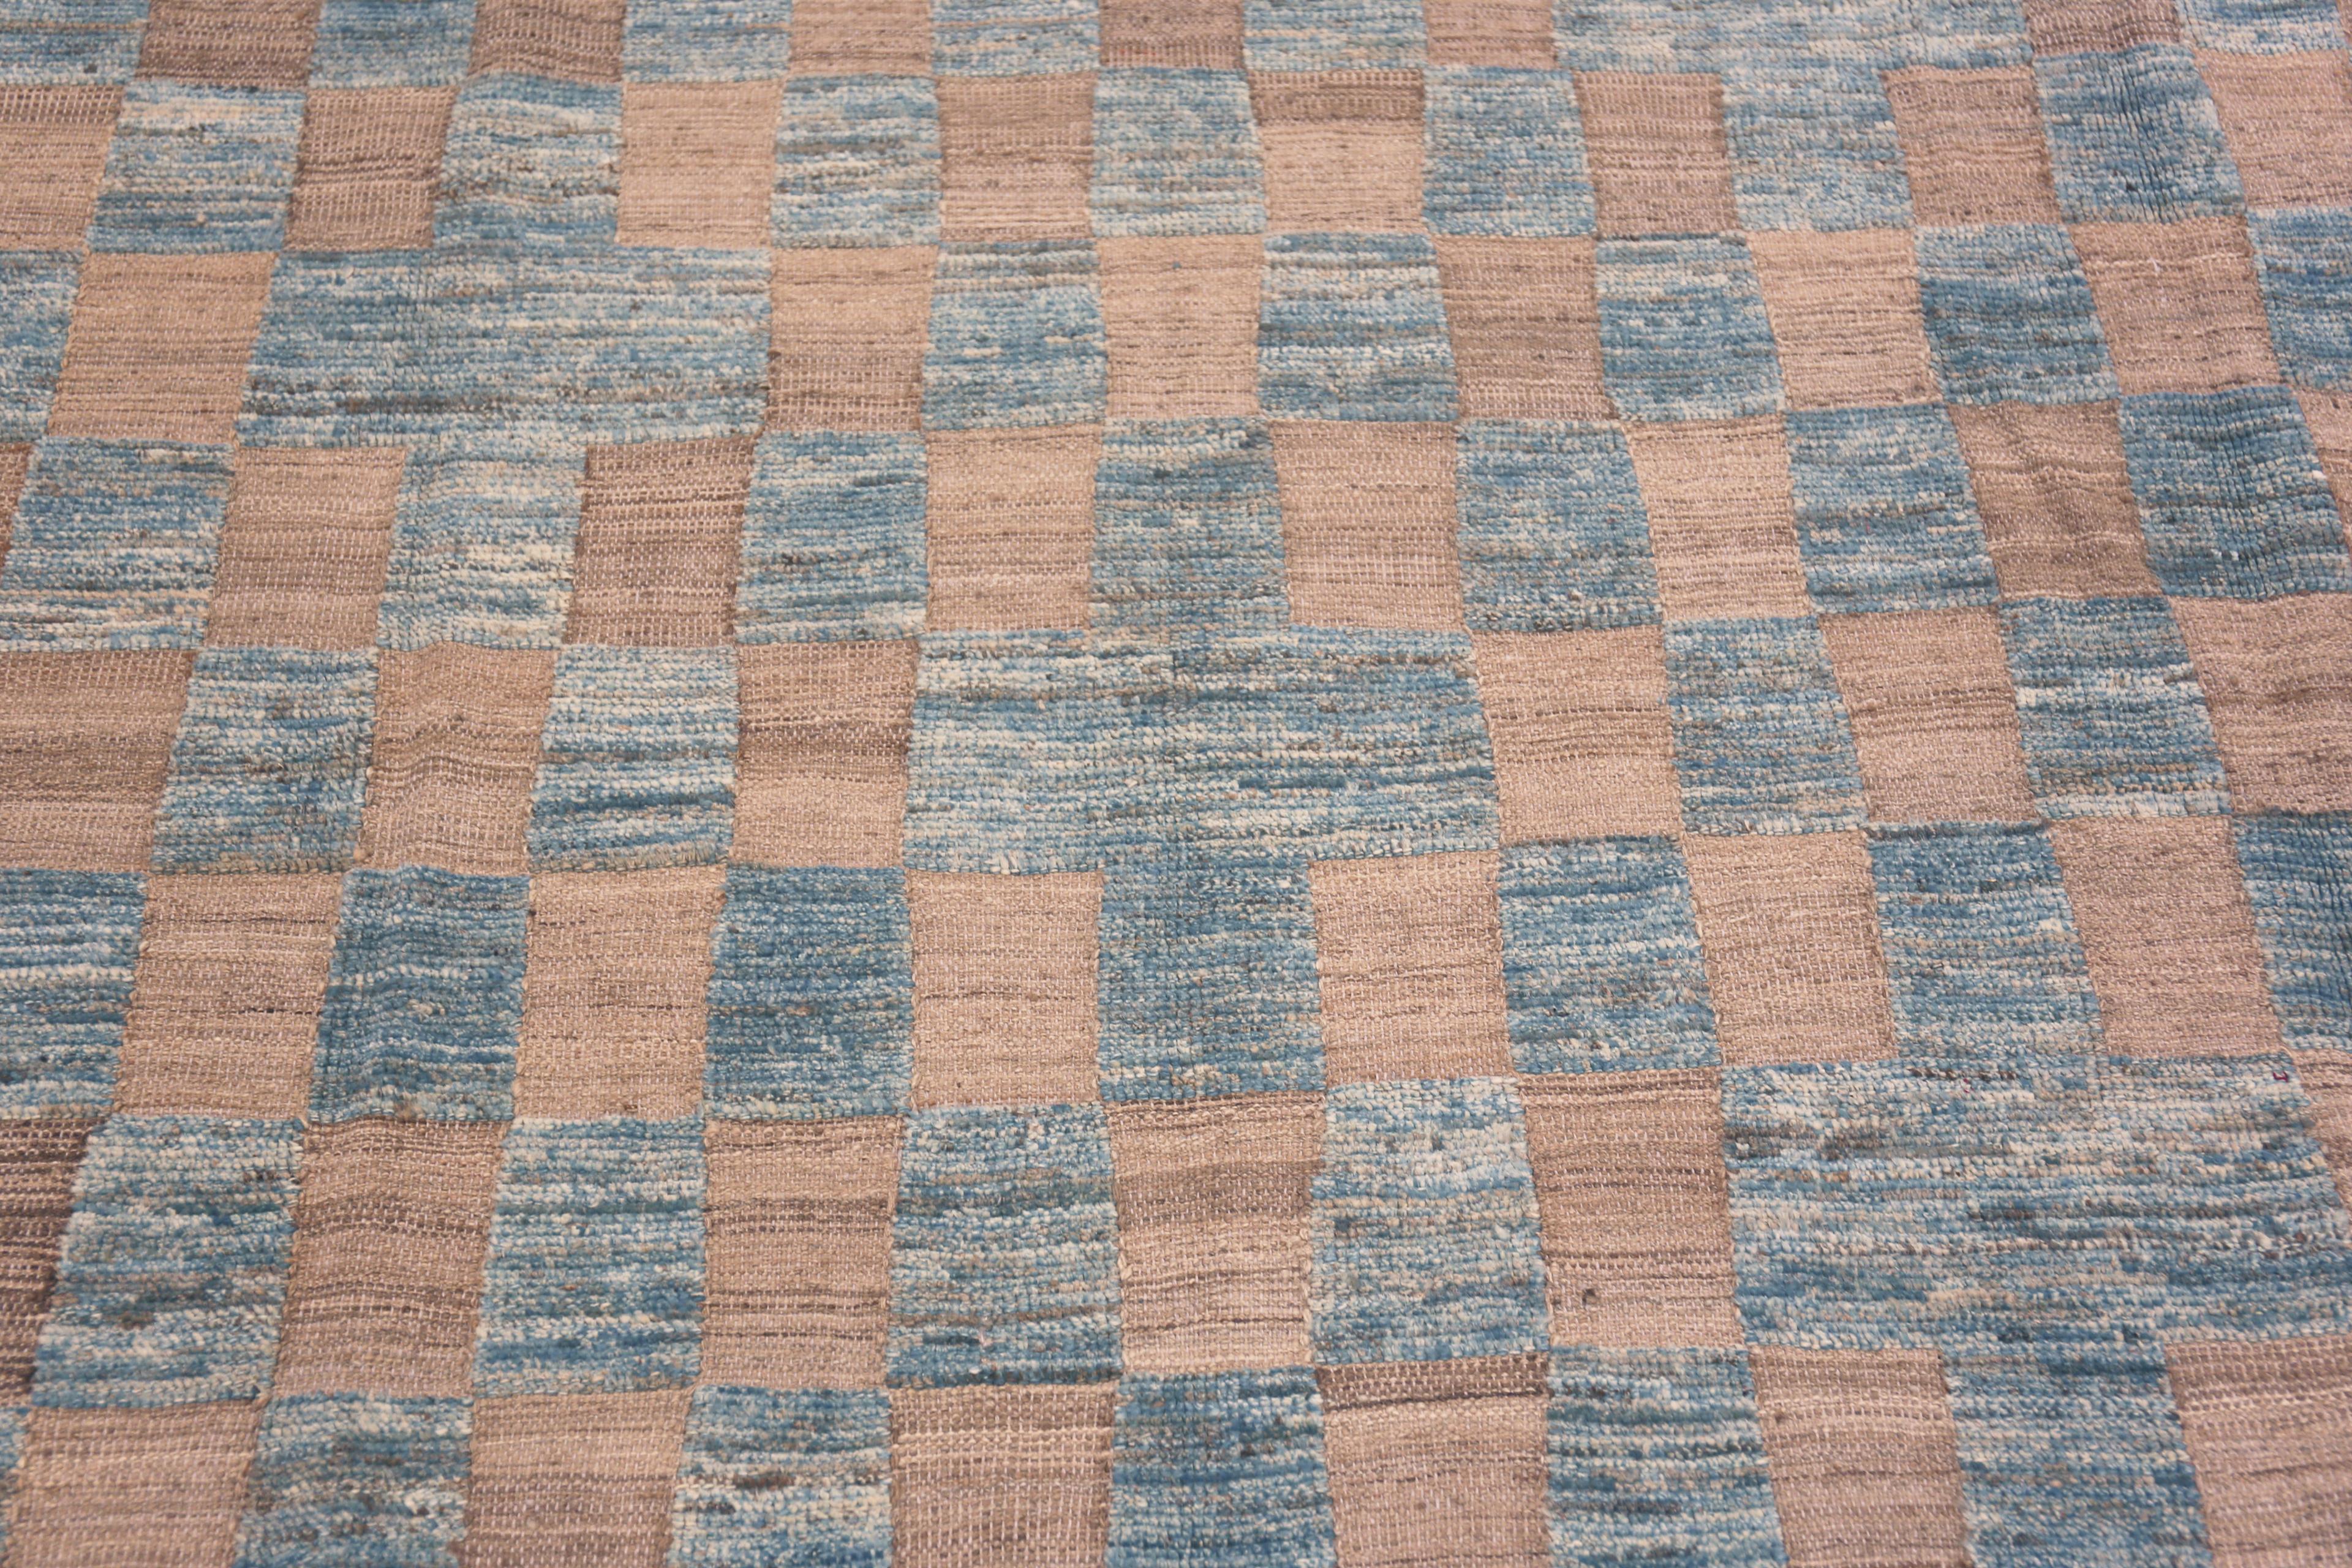 Centrasiatique Collection Nazmiyal, tapis tribal géométrique moderne, taille de pièce 8'4